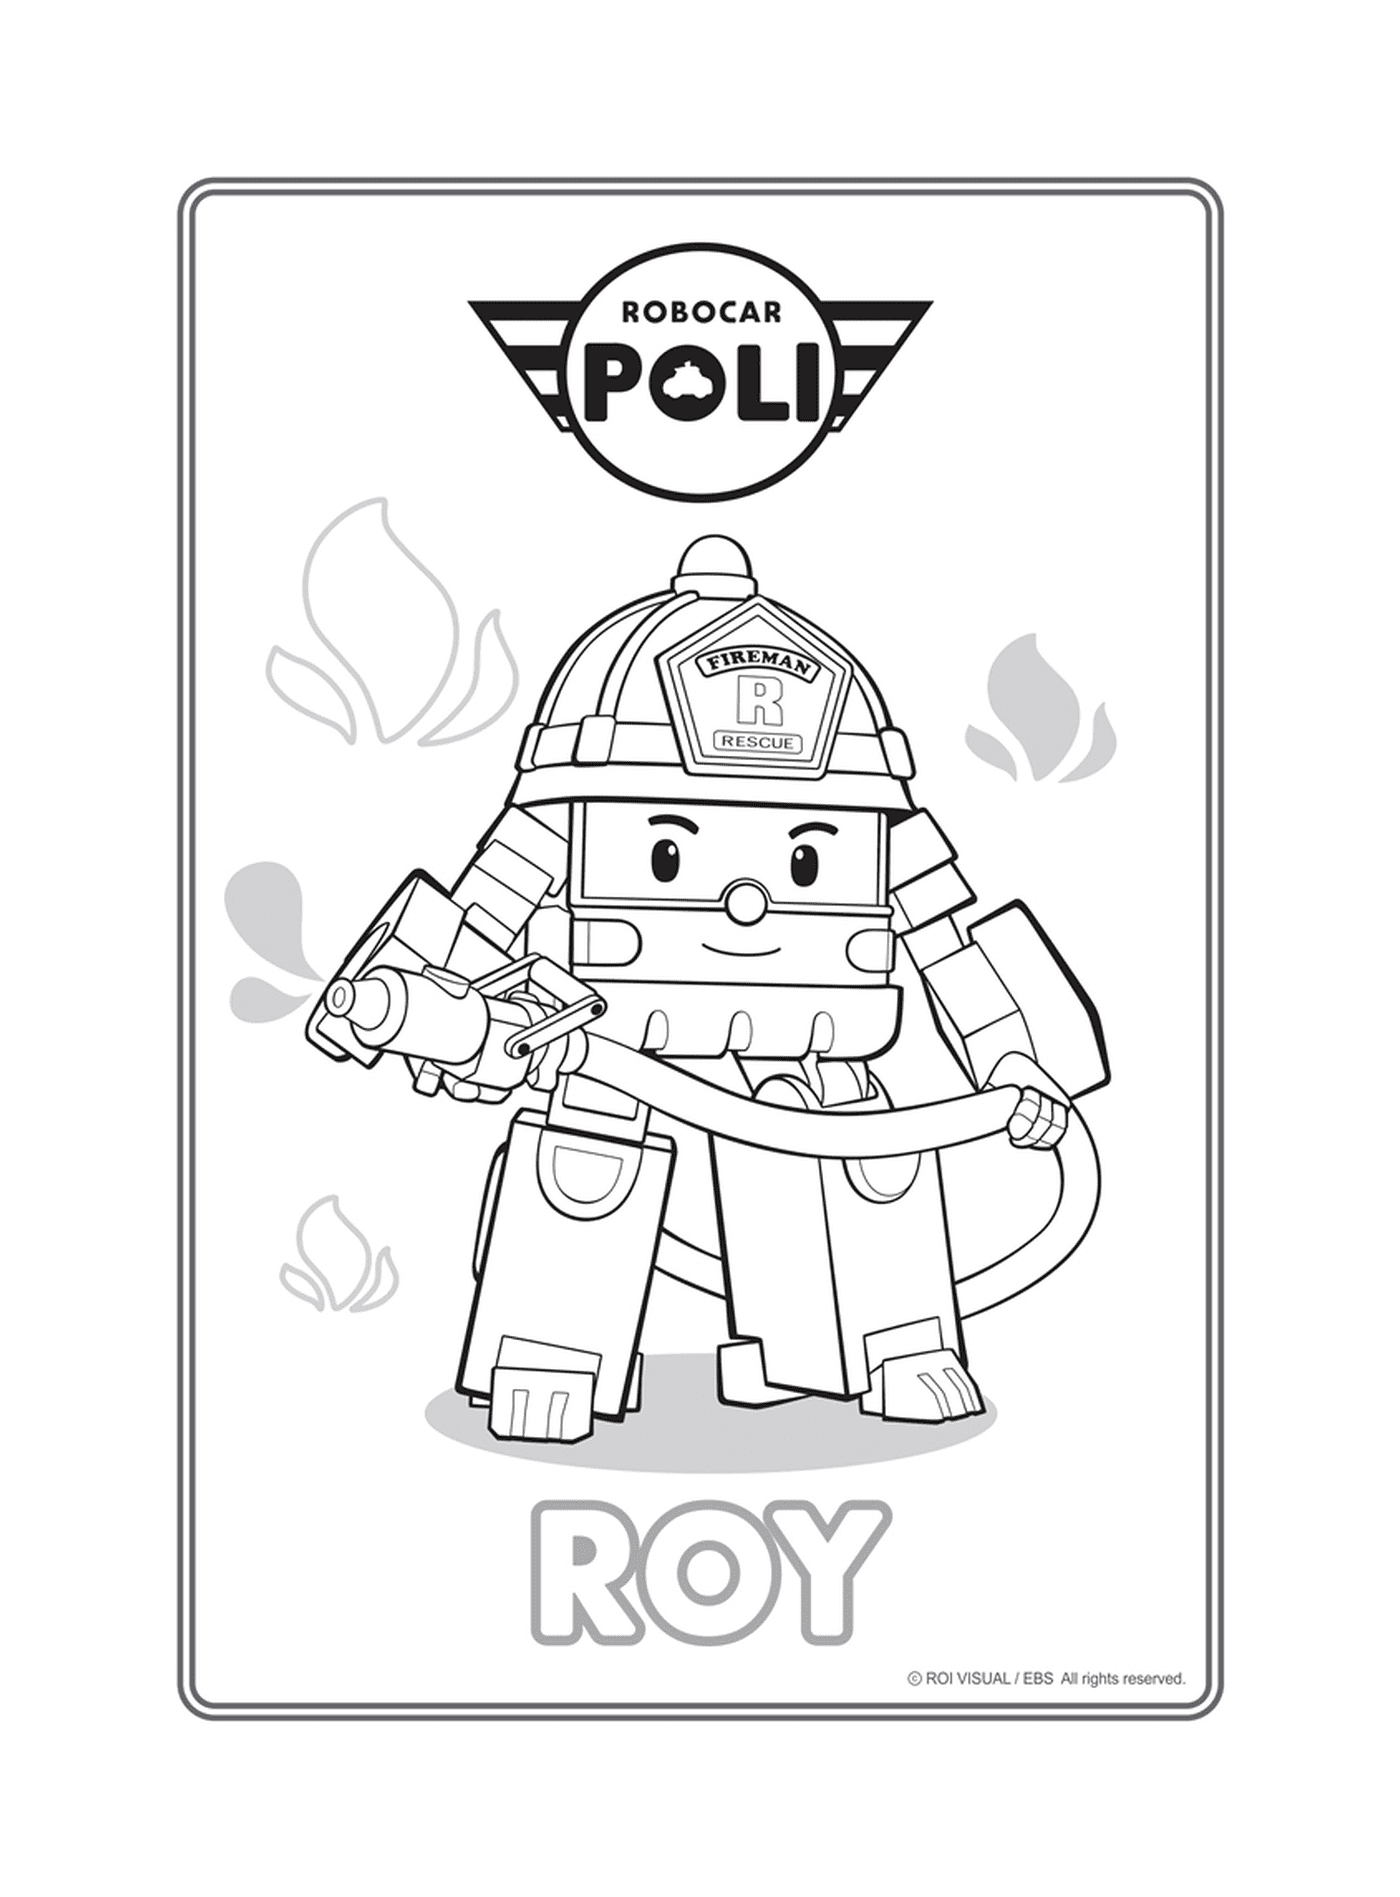  Roy, Robocar Poli's fireman 